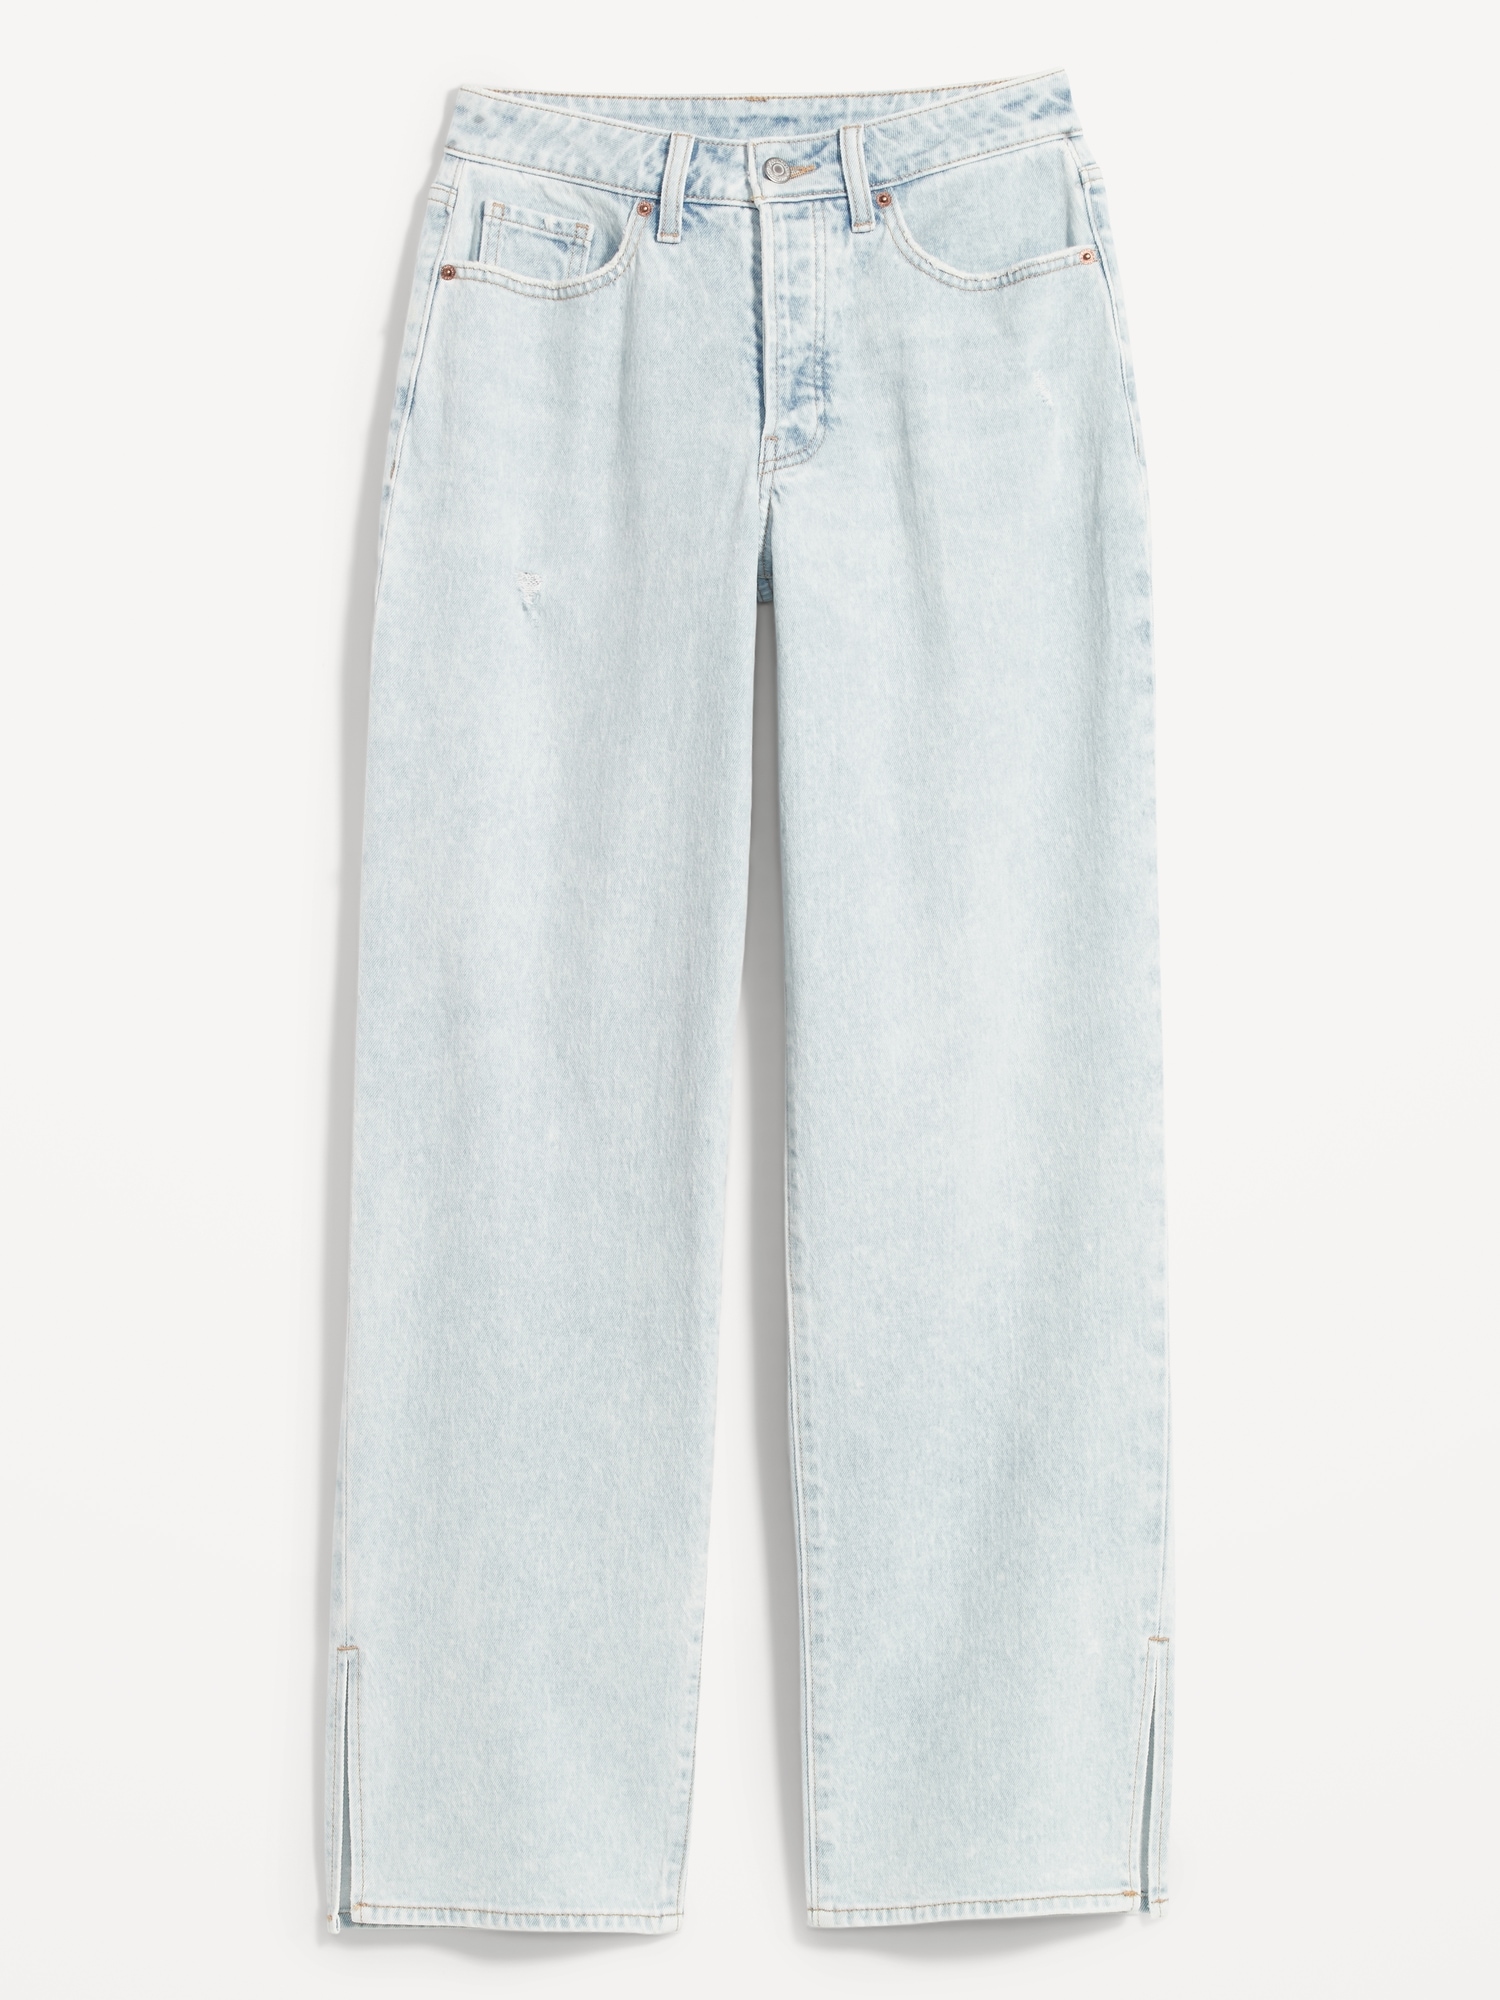 Curvy Button-Fly High-Waisted OG Loose Side-Split Jeans for Women | Old ...